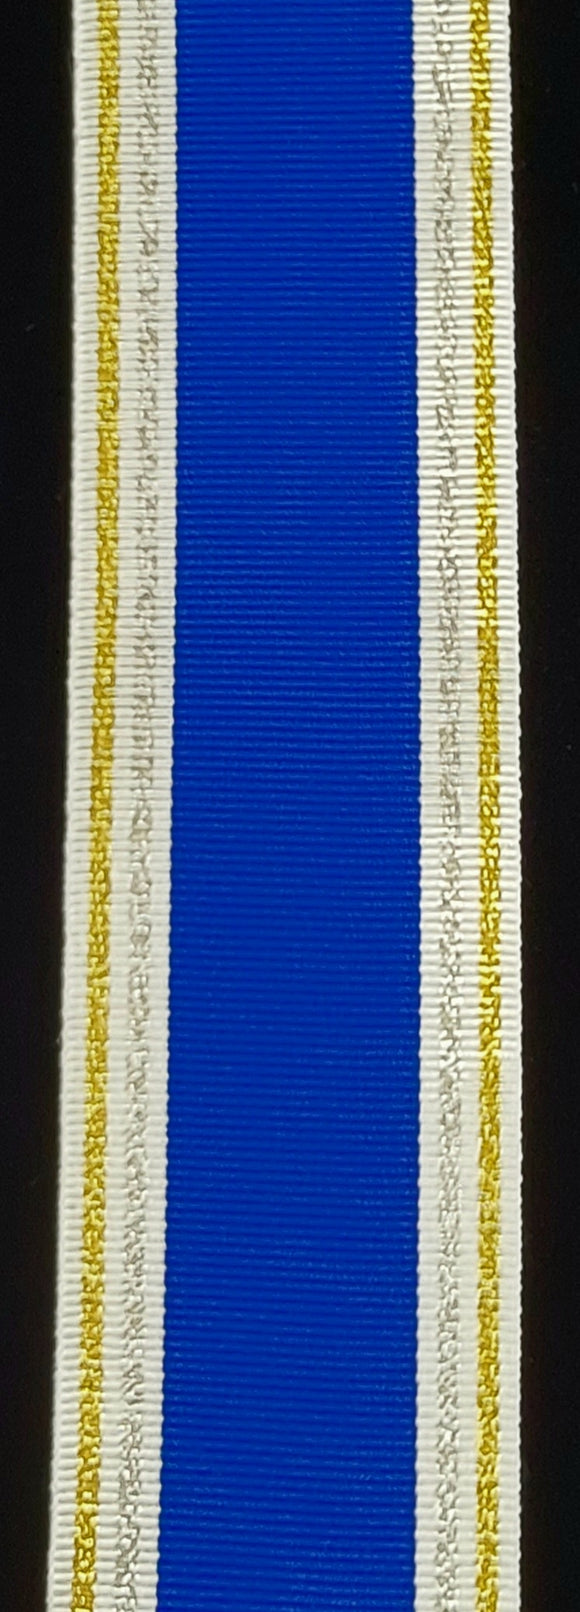 Ribbon, NATO Meritorious Service Medal